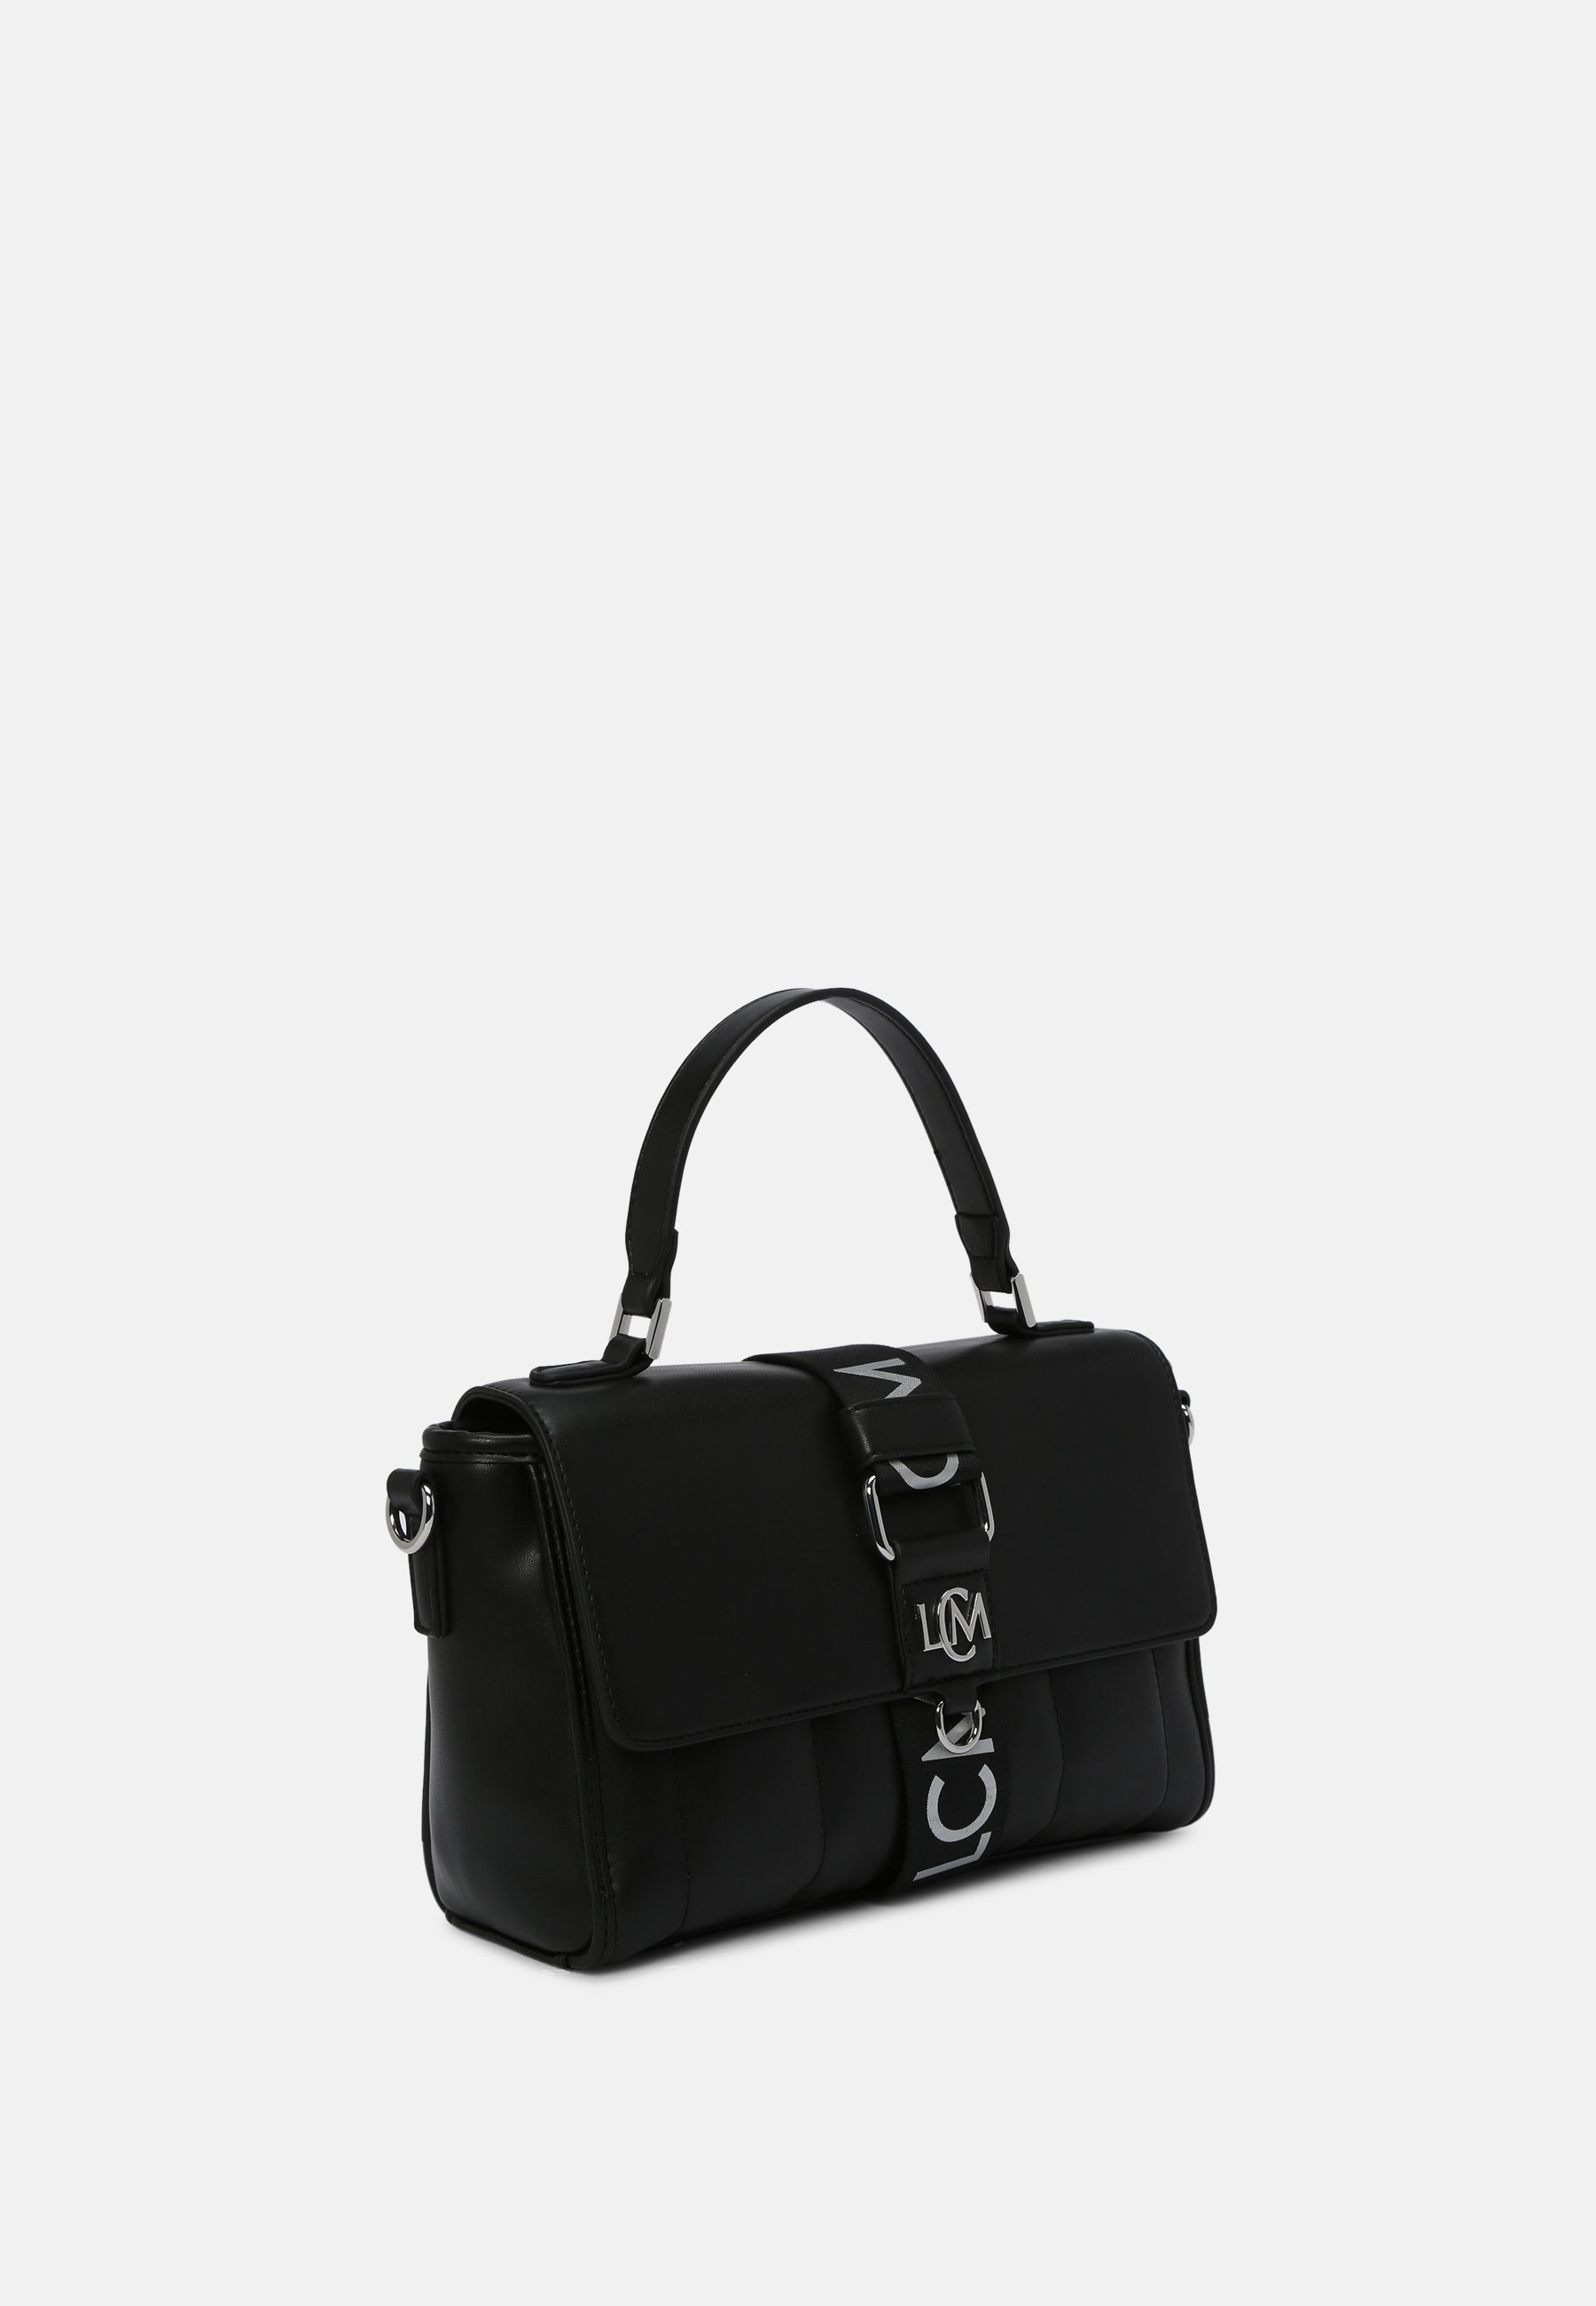 Damenhandtasche Lissy 1004131 von L'Credi - Laure Bags and Travel